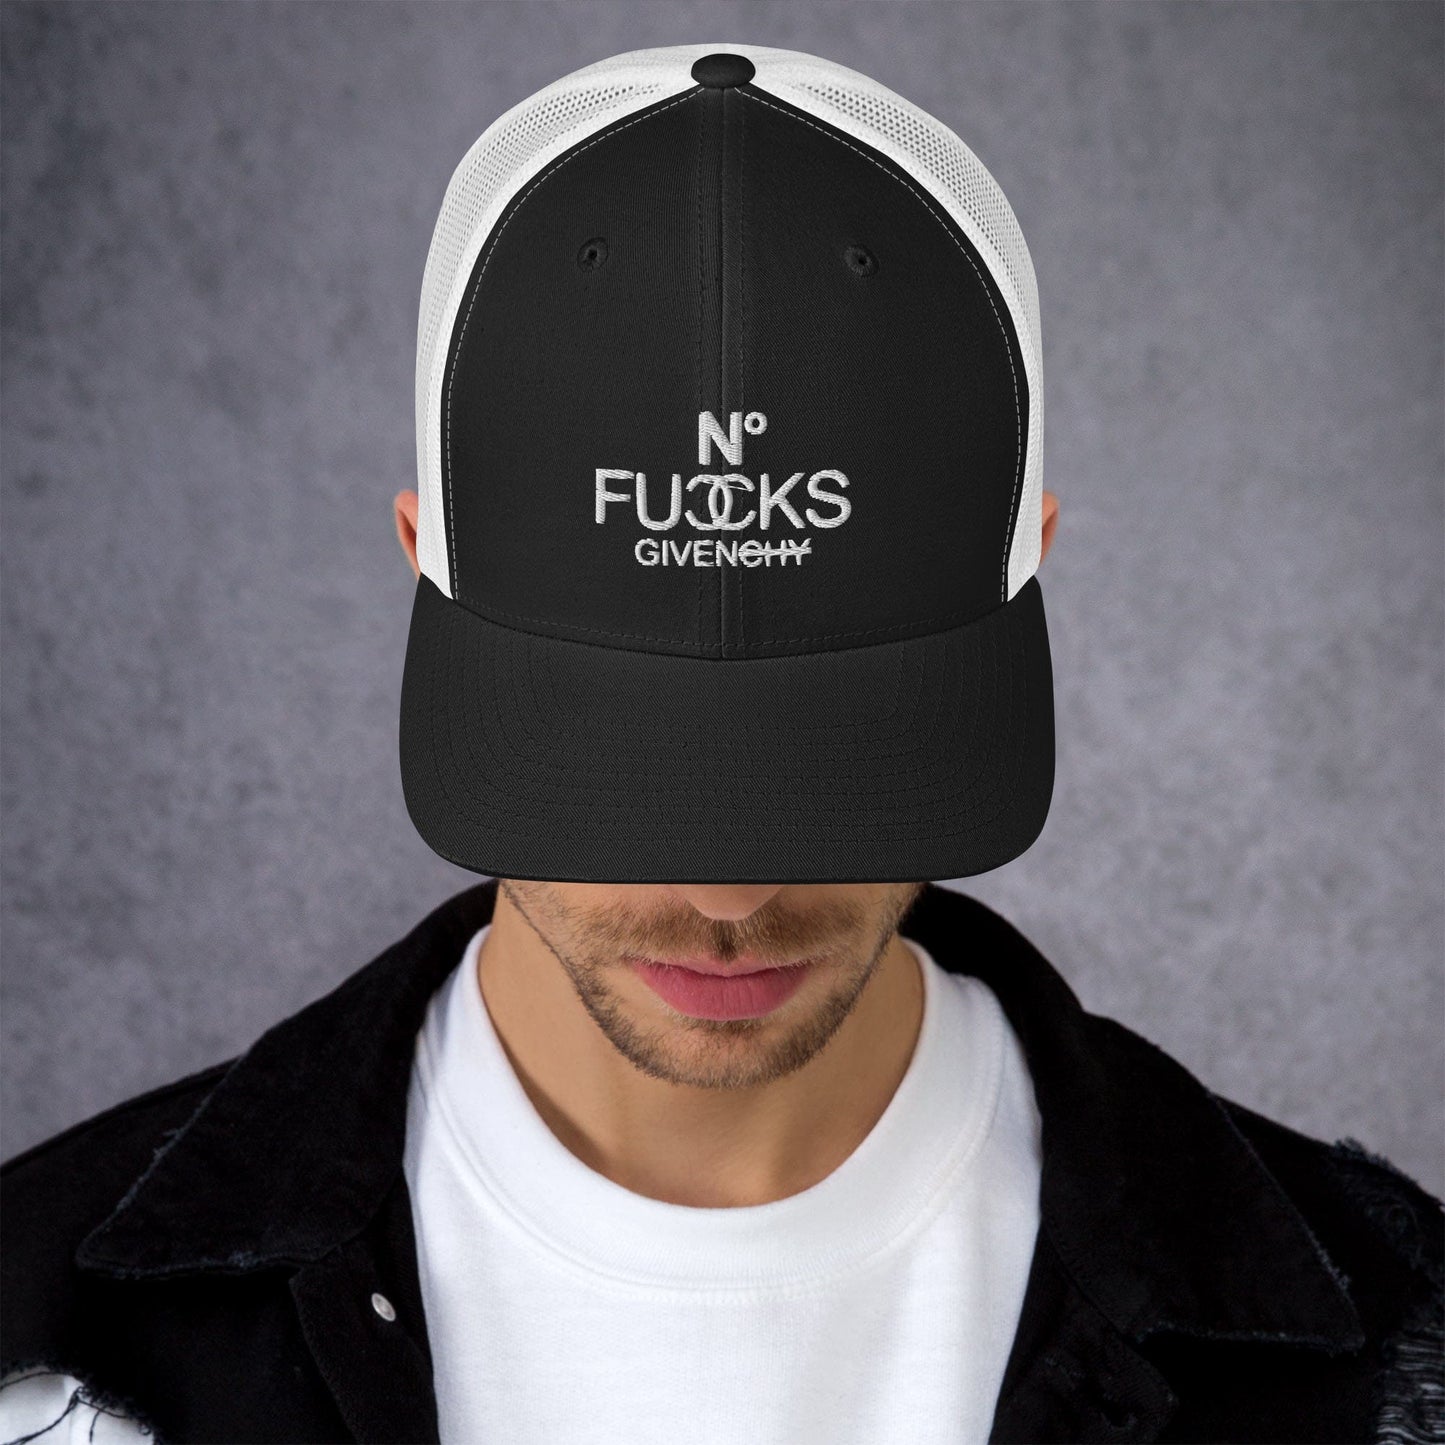 InsensitiviTees™️ Black/ White No Fucks Given Embroidered Snapback Trucker Hat